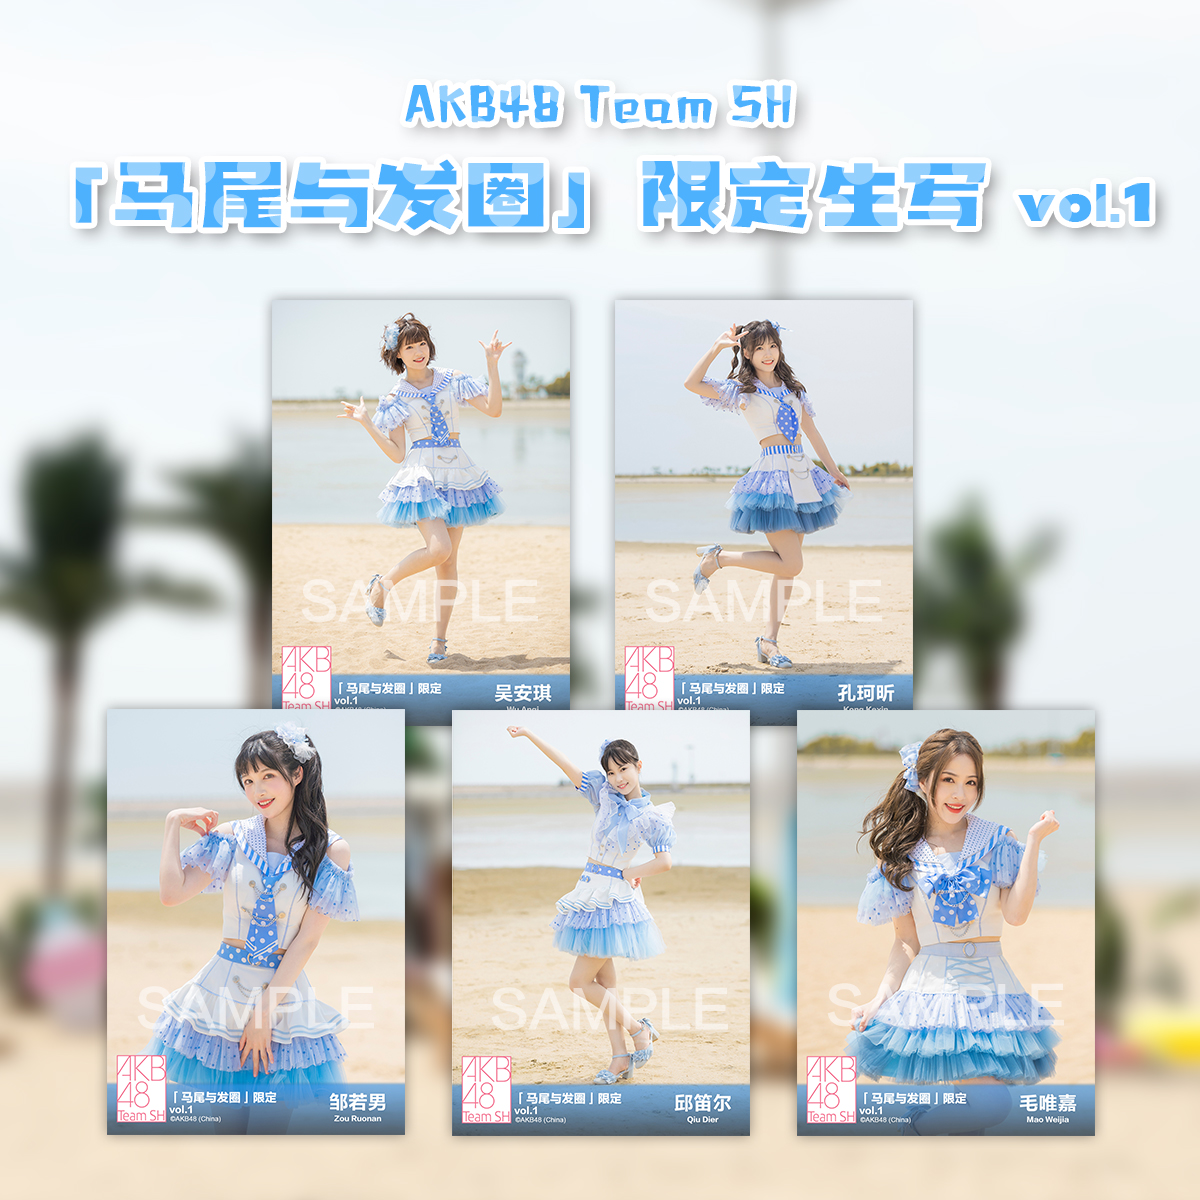 AKB48 Team SH《马尾与发圈》限定生写vol.1